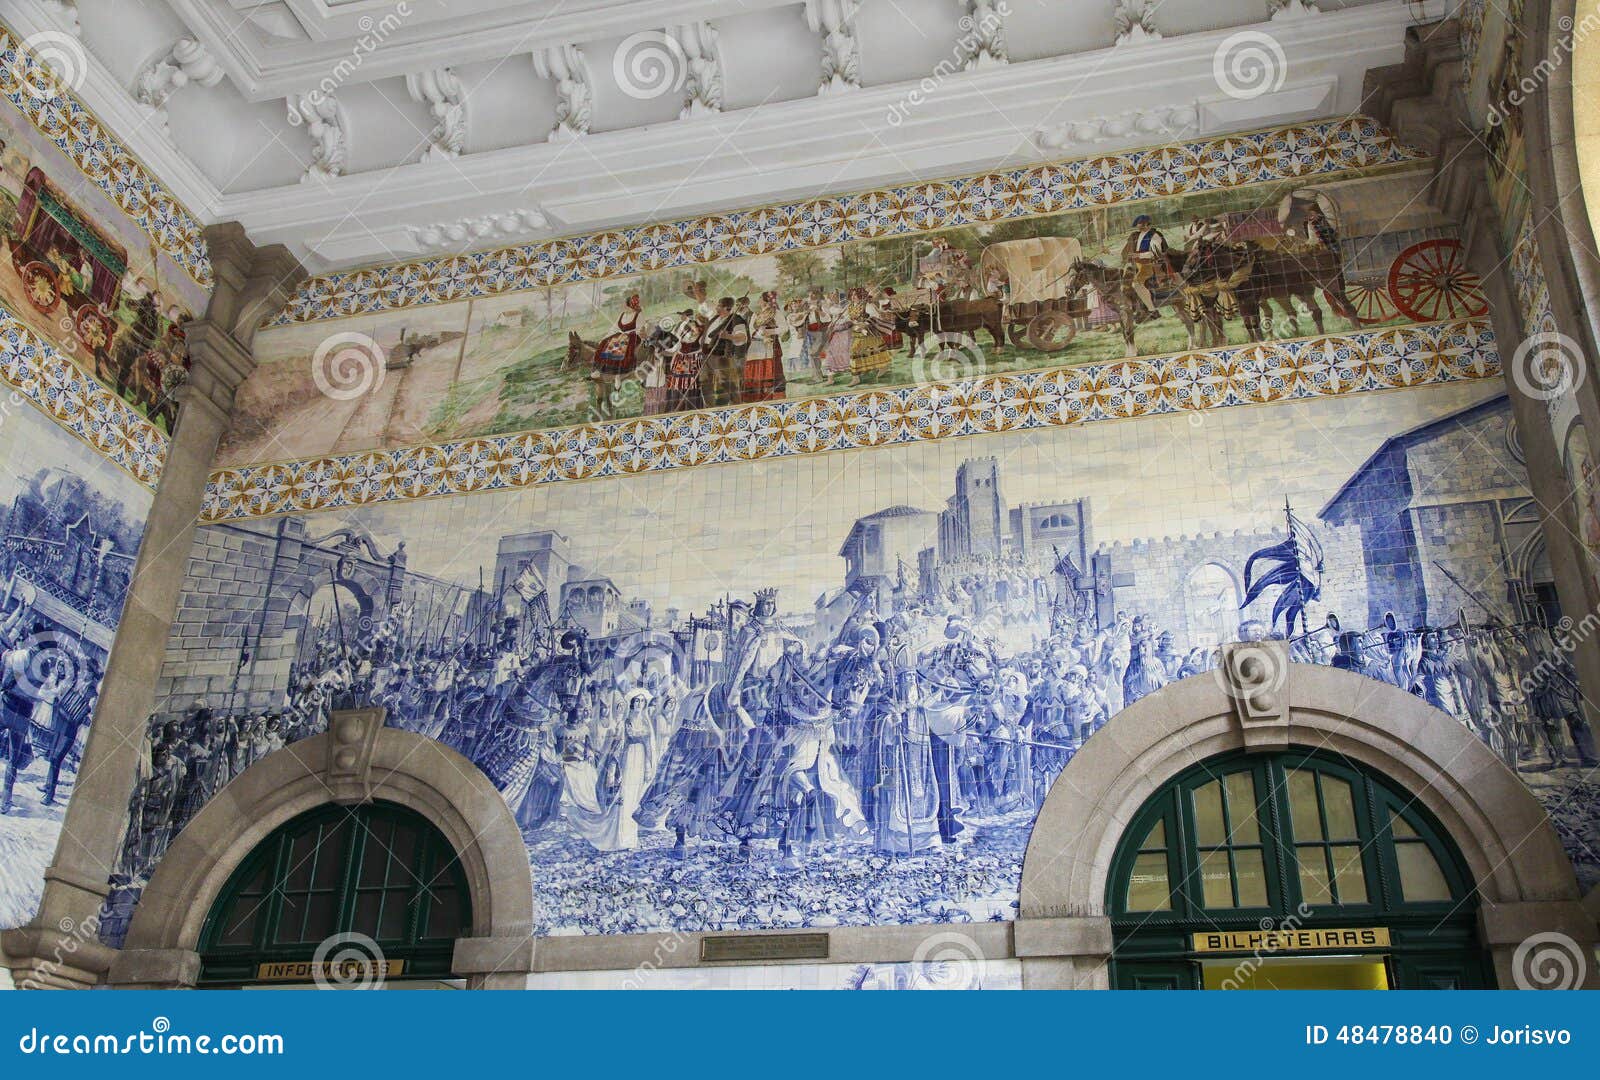 azulejo panel in sao bento railway station in porto, portugal